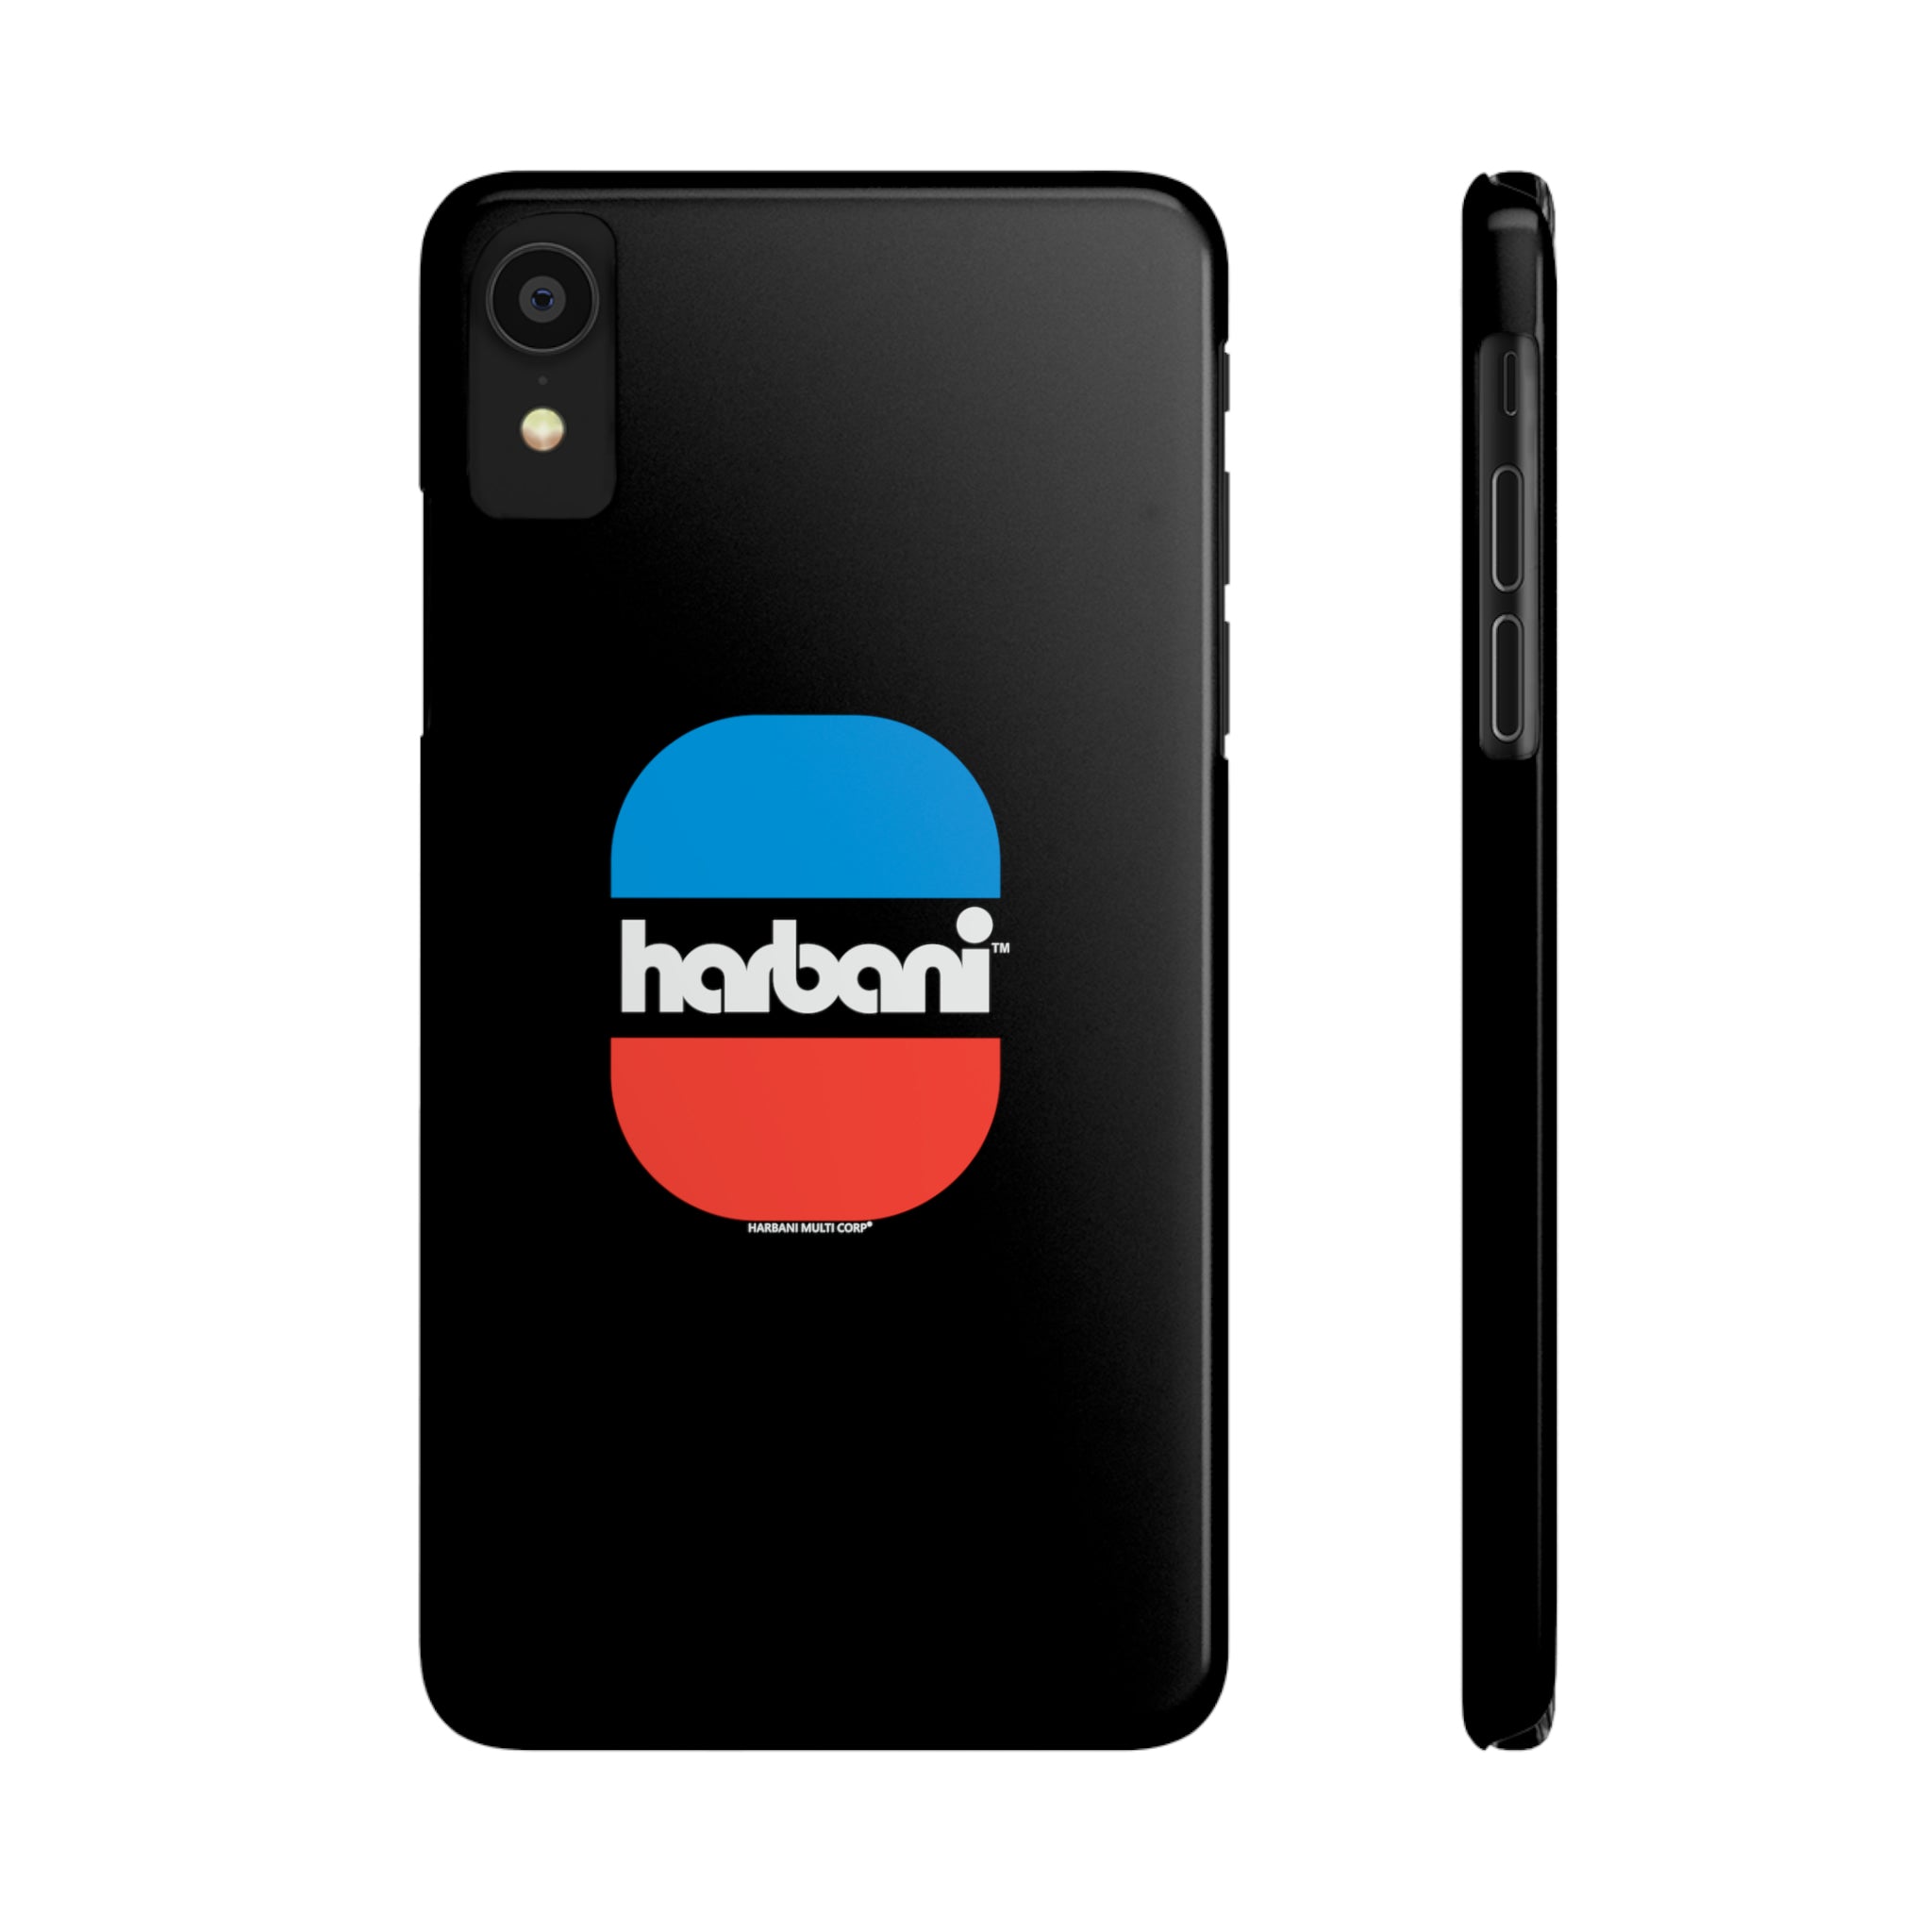 HARBANI | Slim Phone Cases